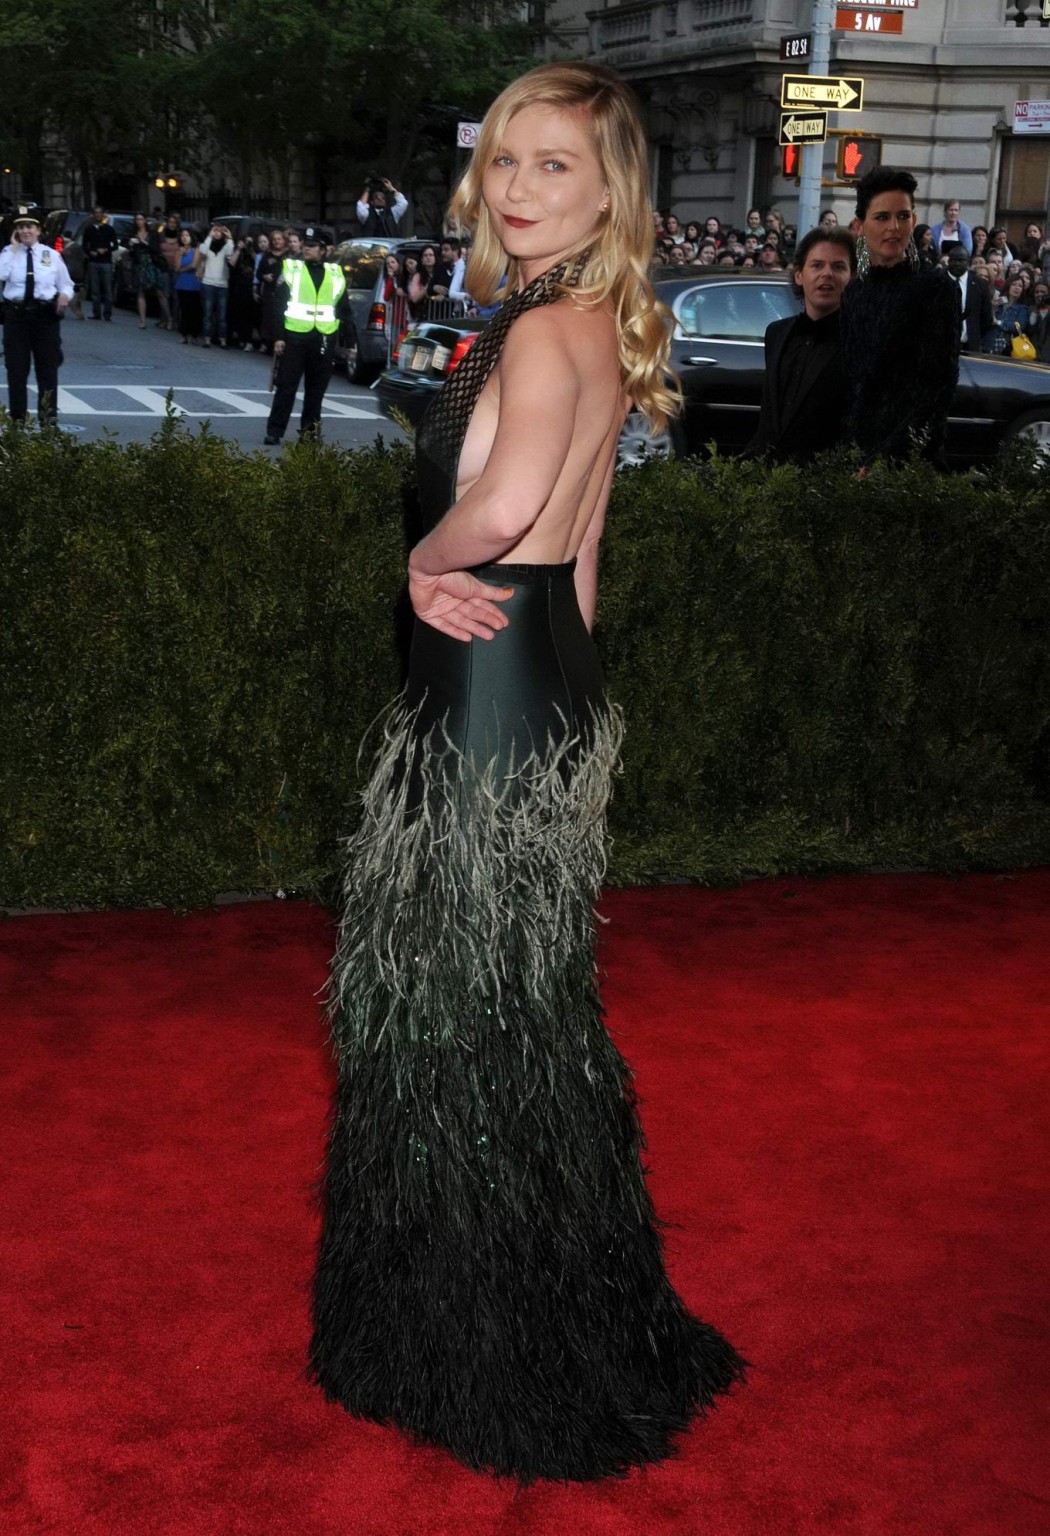 Braless Kirsten Dunst showing cleavage  side boob at the 2013 Met Gala in NYC #75233201